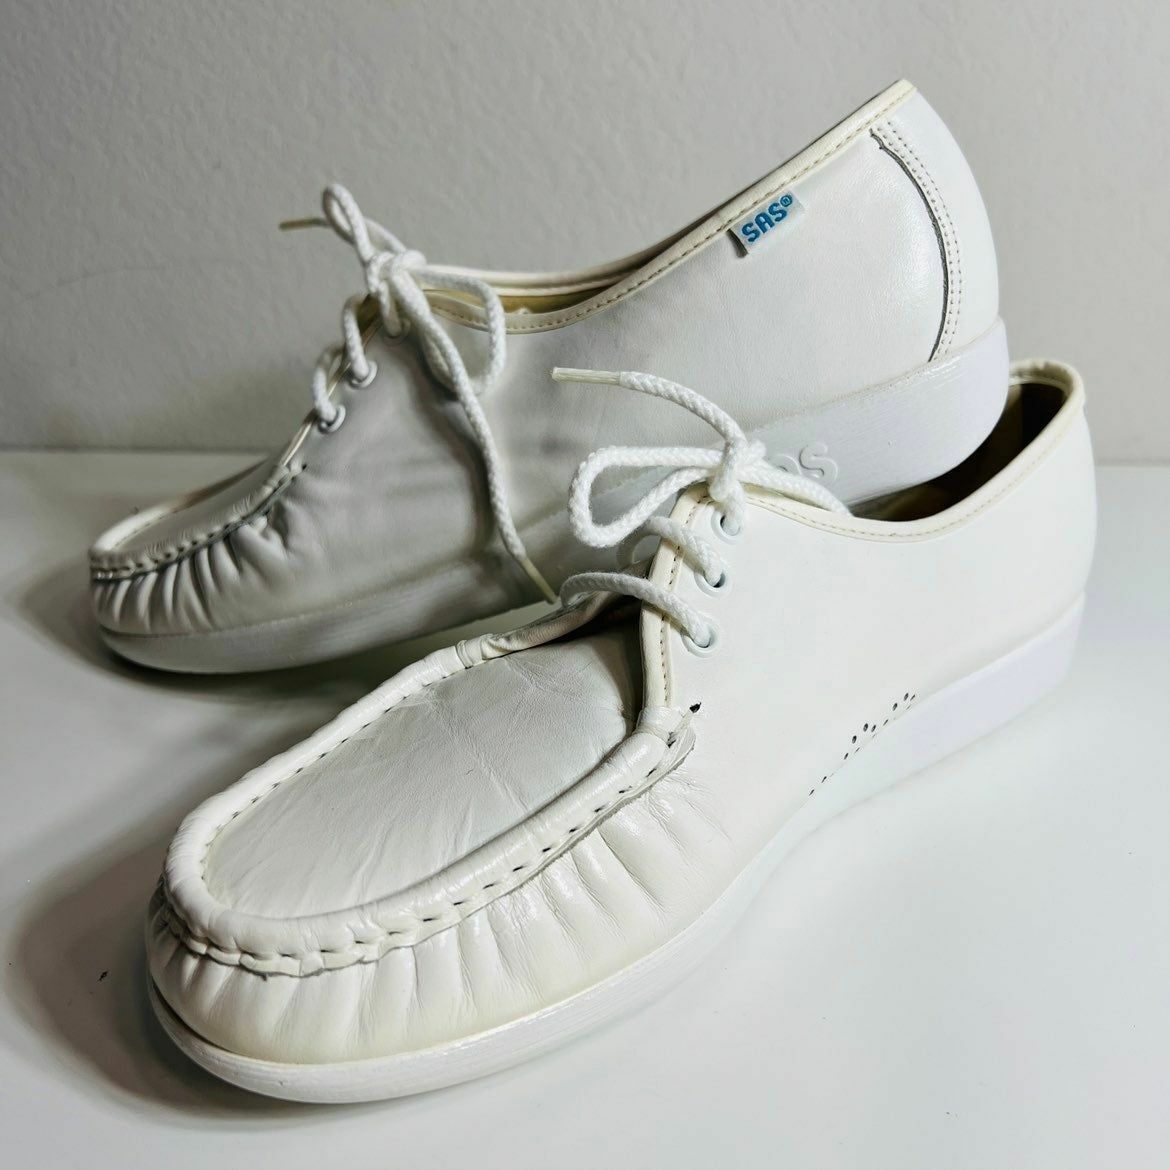 SAS Women's Shoes Walking Comfort Lace Up Size 11 M Soft Ecru / Leather White